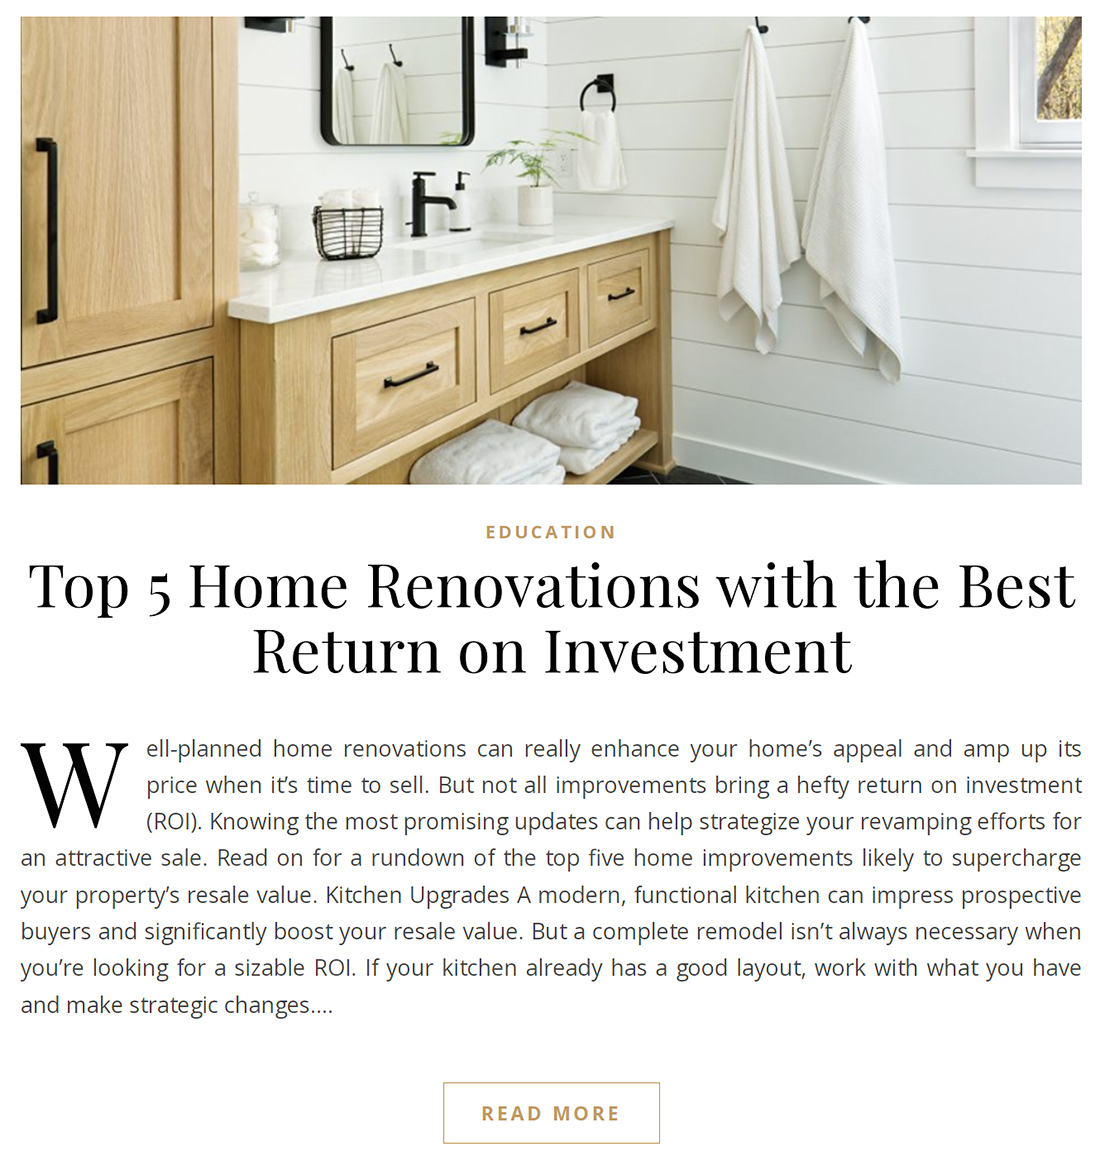 Top 5 Home Renovations